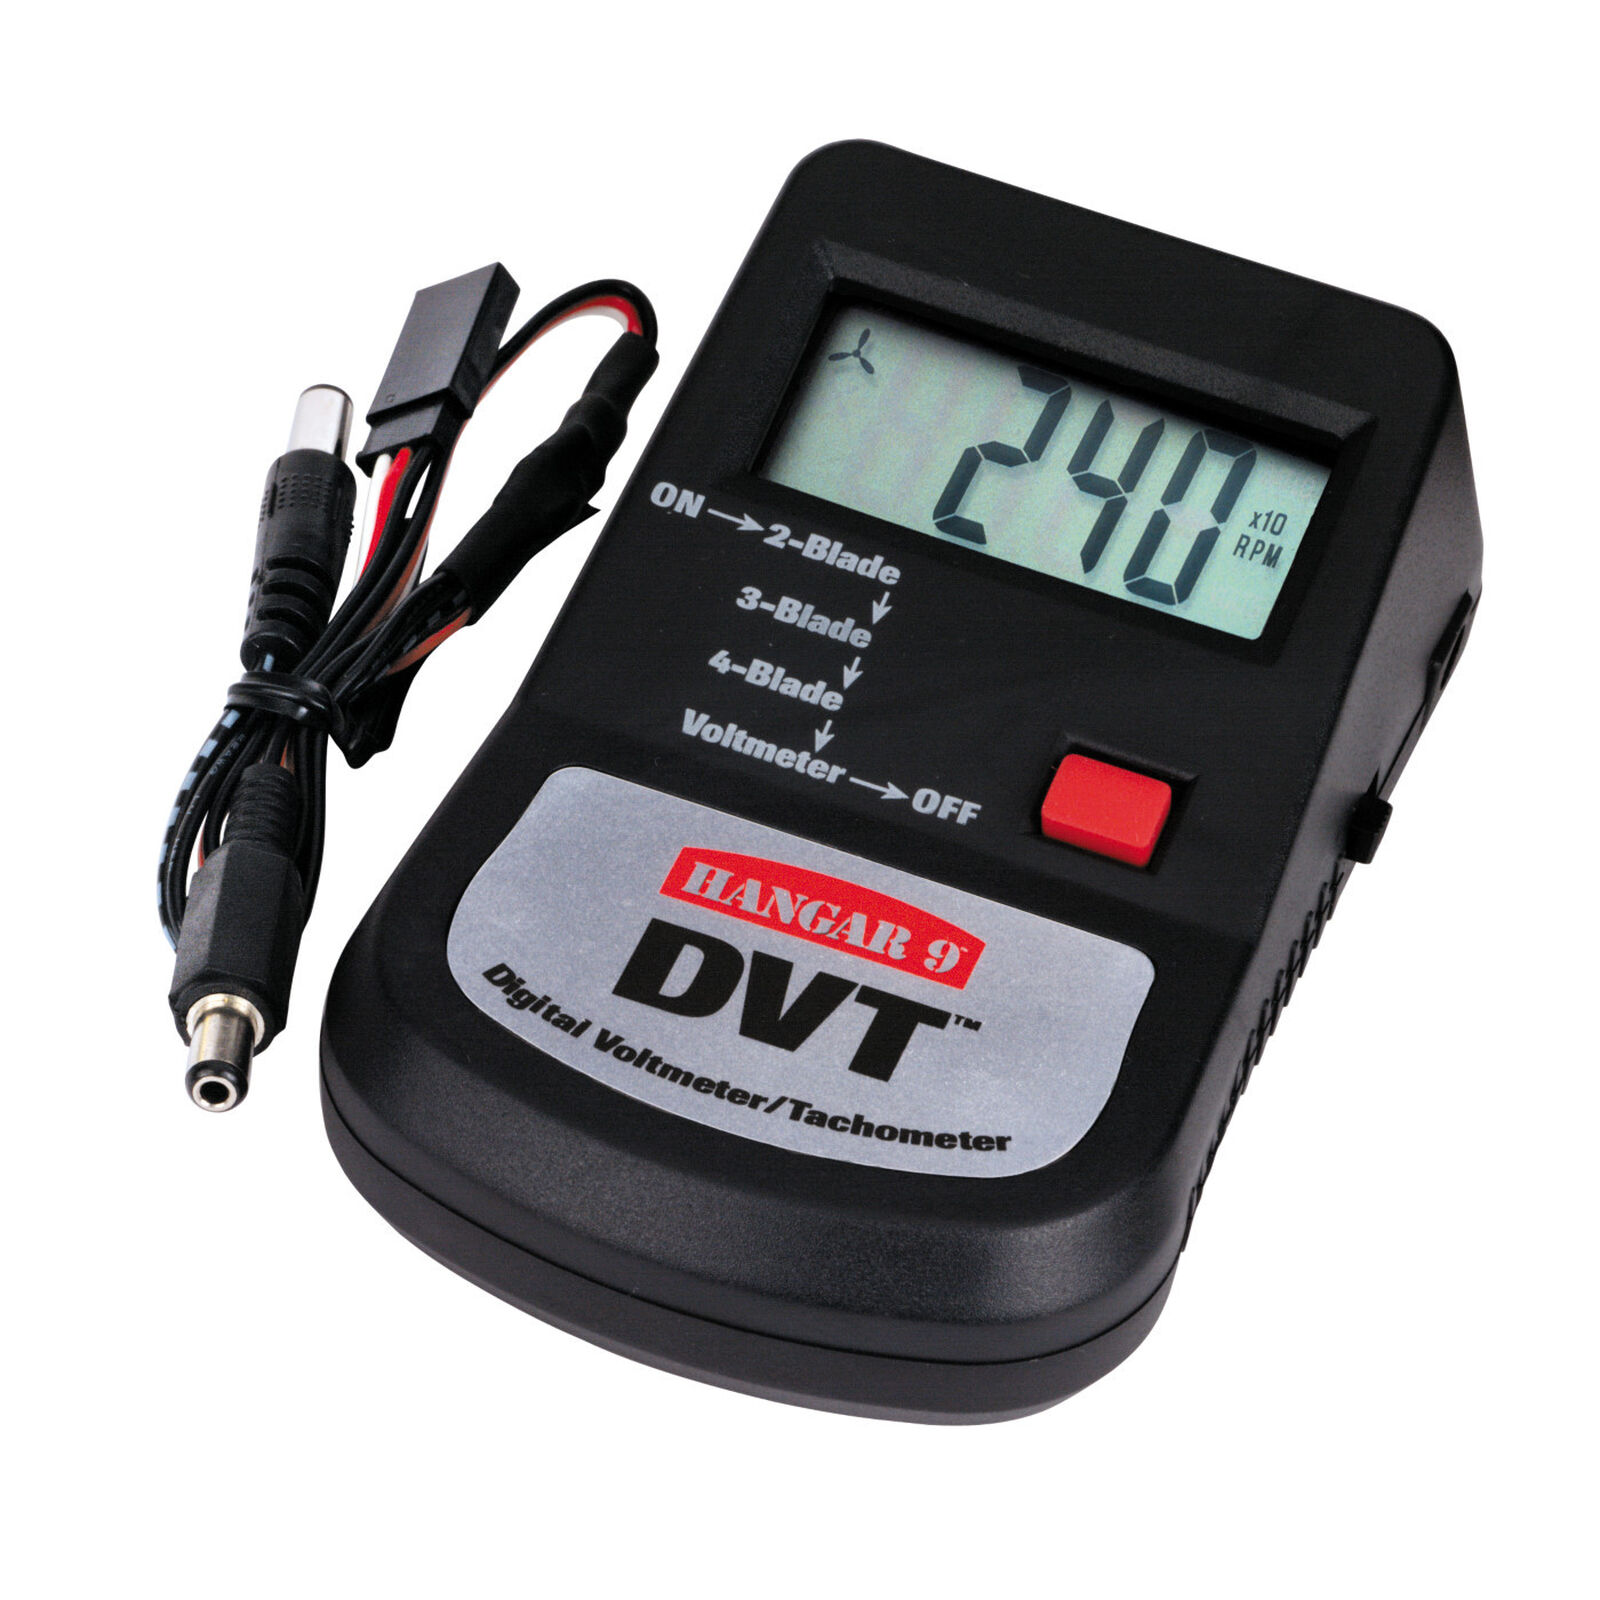 DVT Digital Voltmeter/Tachometer